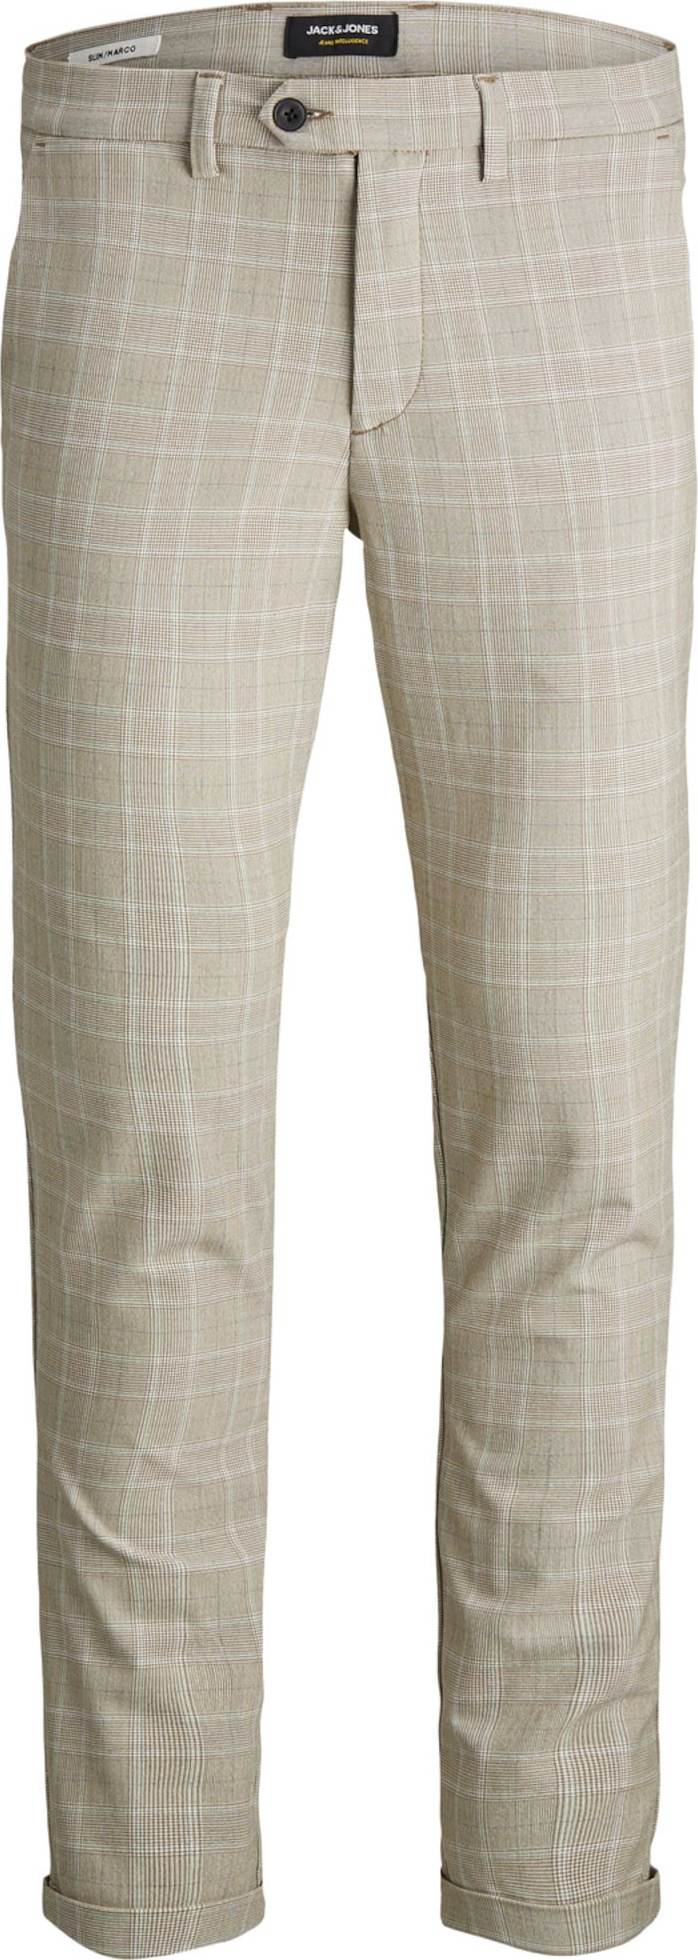 Chino kalhoty 'Marco Connor' jack & jones béžová / šedá / bílá